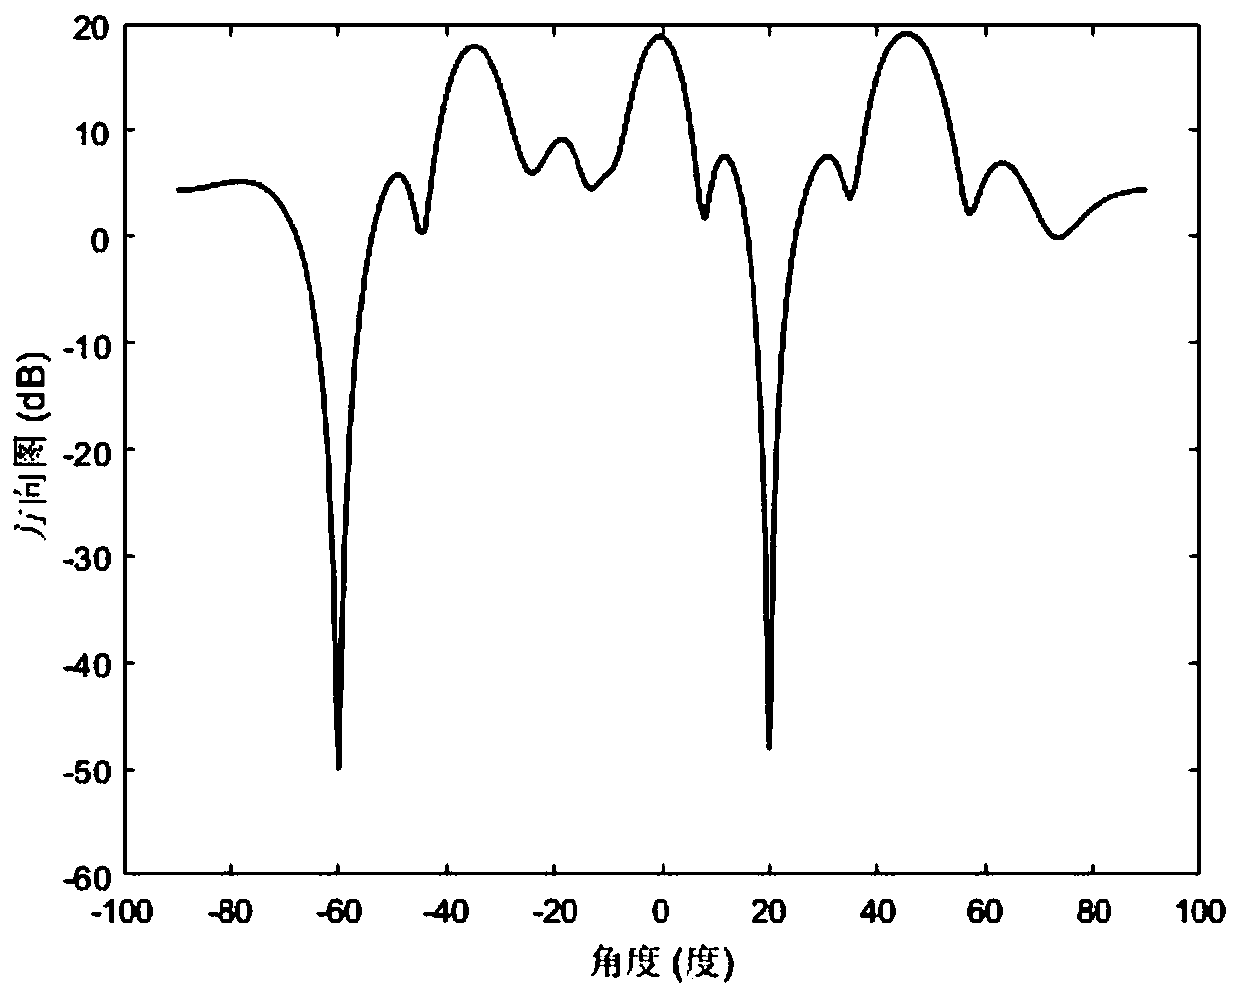 Synthesis method of mimo radar transmission waveform based on coordinate descent algorithm